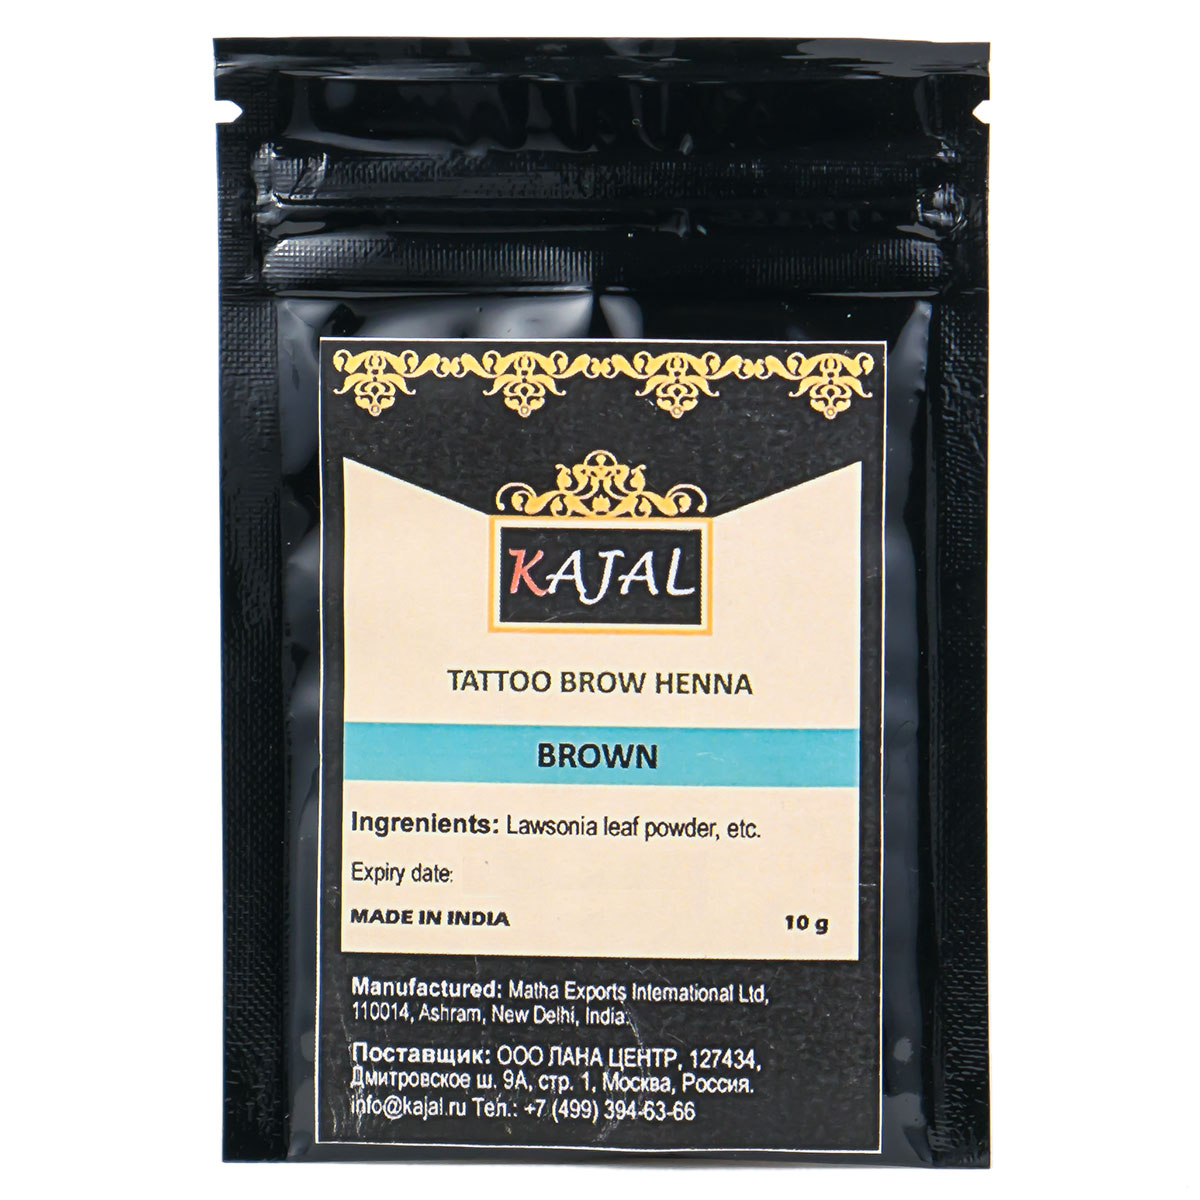 Хна KAJAL TATTOO BROW HENNA для окрашивания бровей (коричневая) 10 гр. хна brow henna kajal для окрашивания бровей и ресниц темно коричневая 10 гр